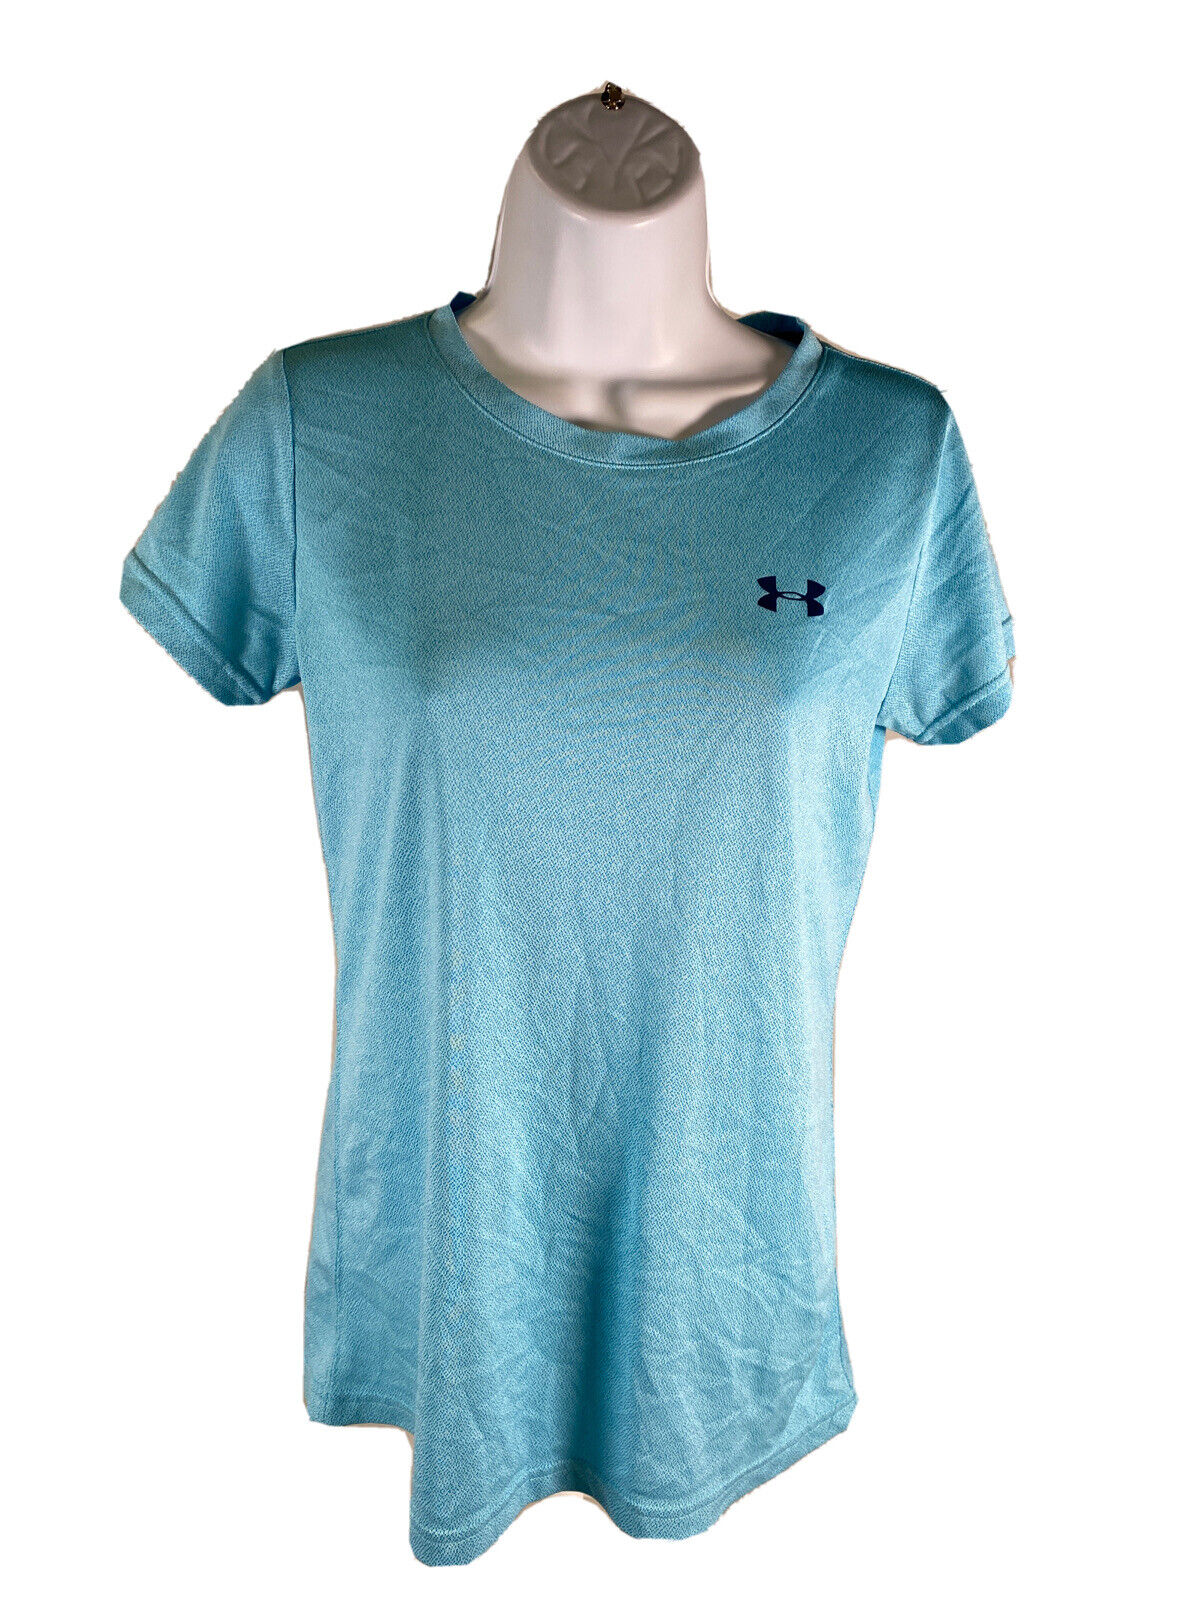 Under Armour Women's Blue Short Sleeve HeatGear Athletic Shirt Sz XS